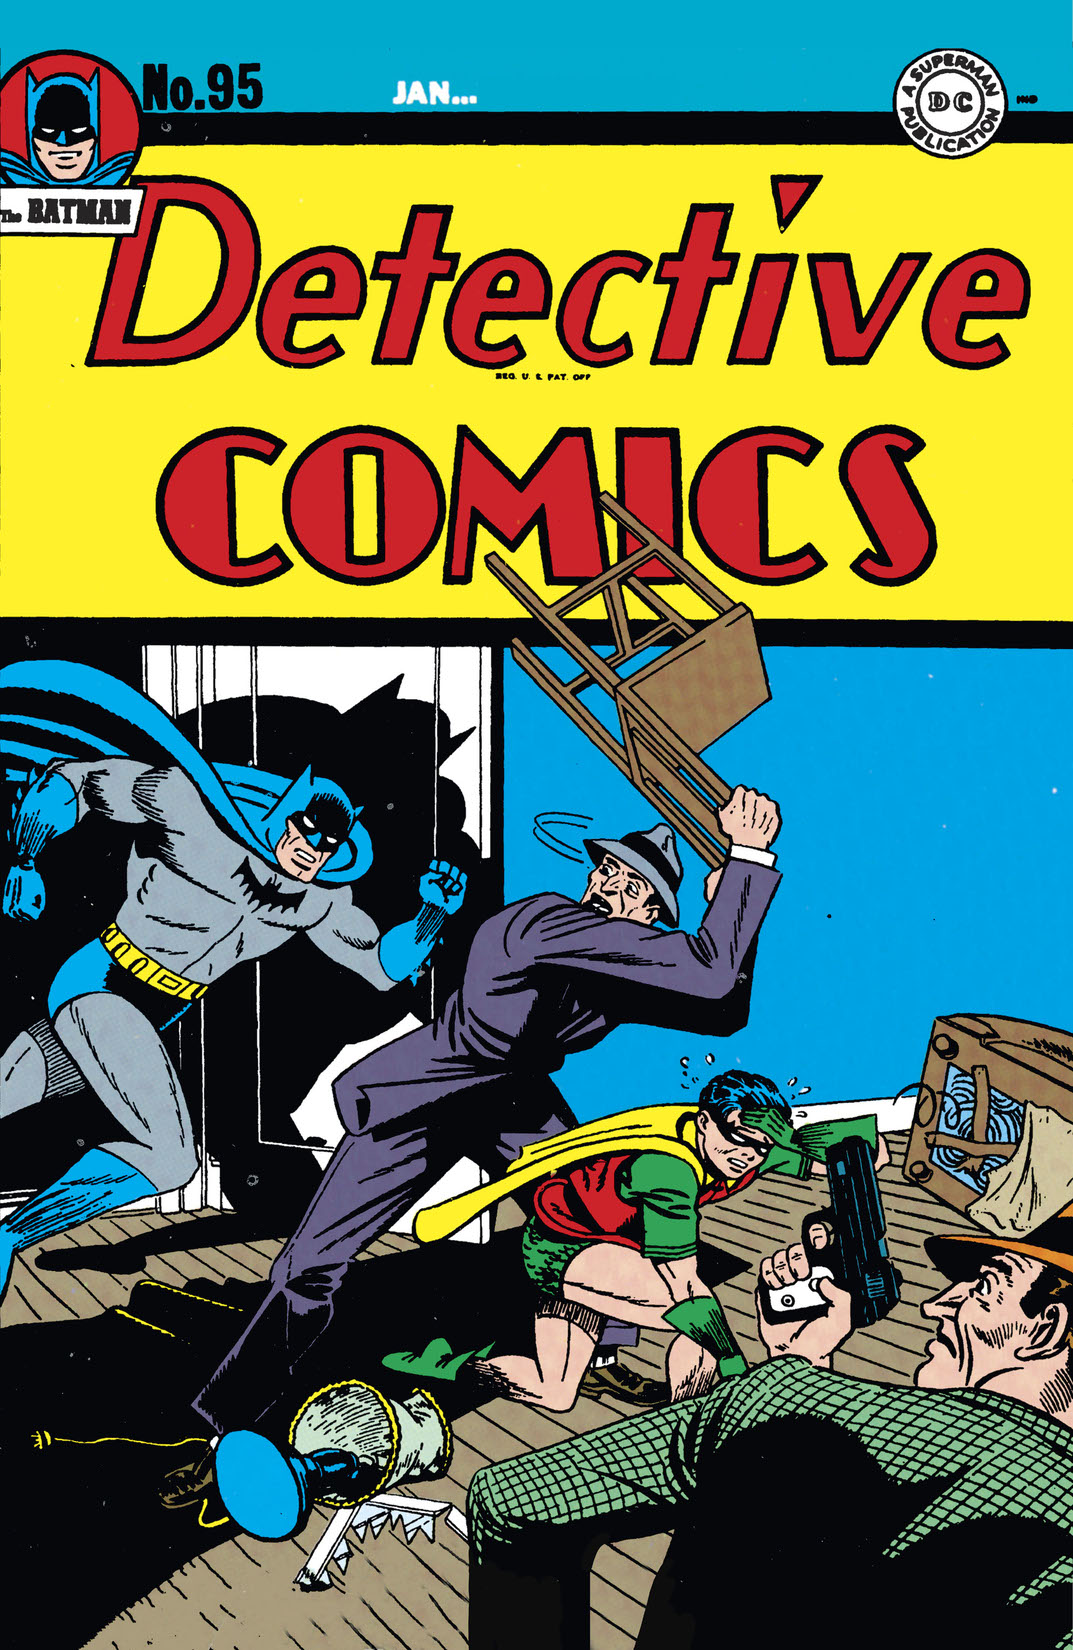 Detective Comics (1937-) #95 preview images